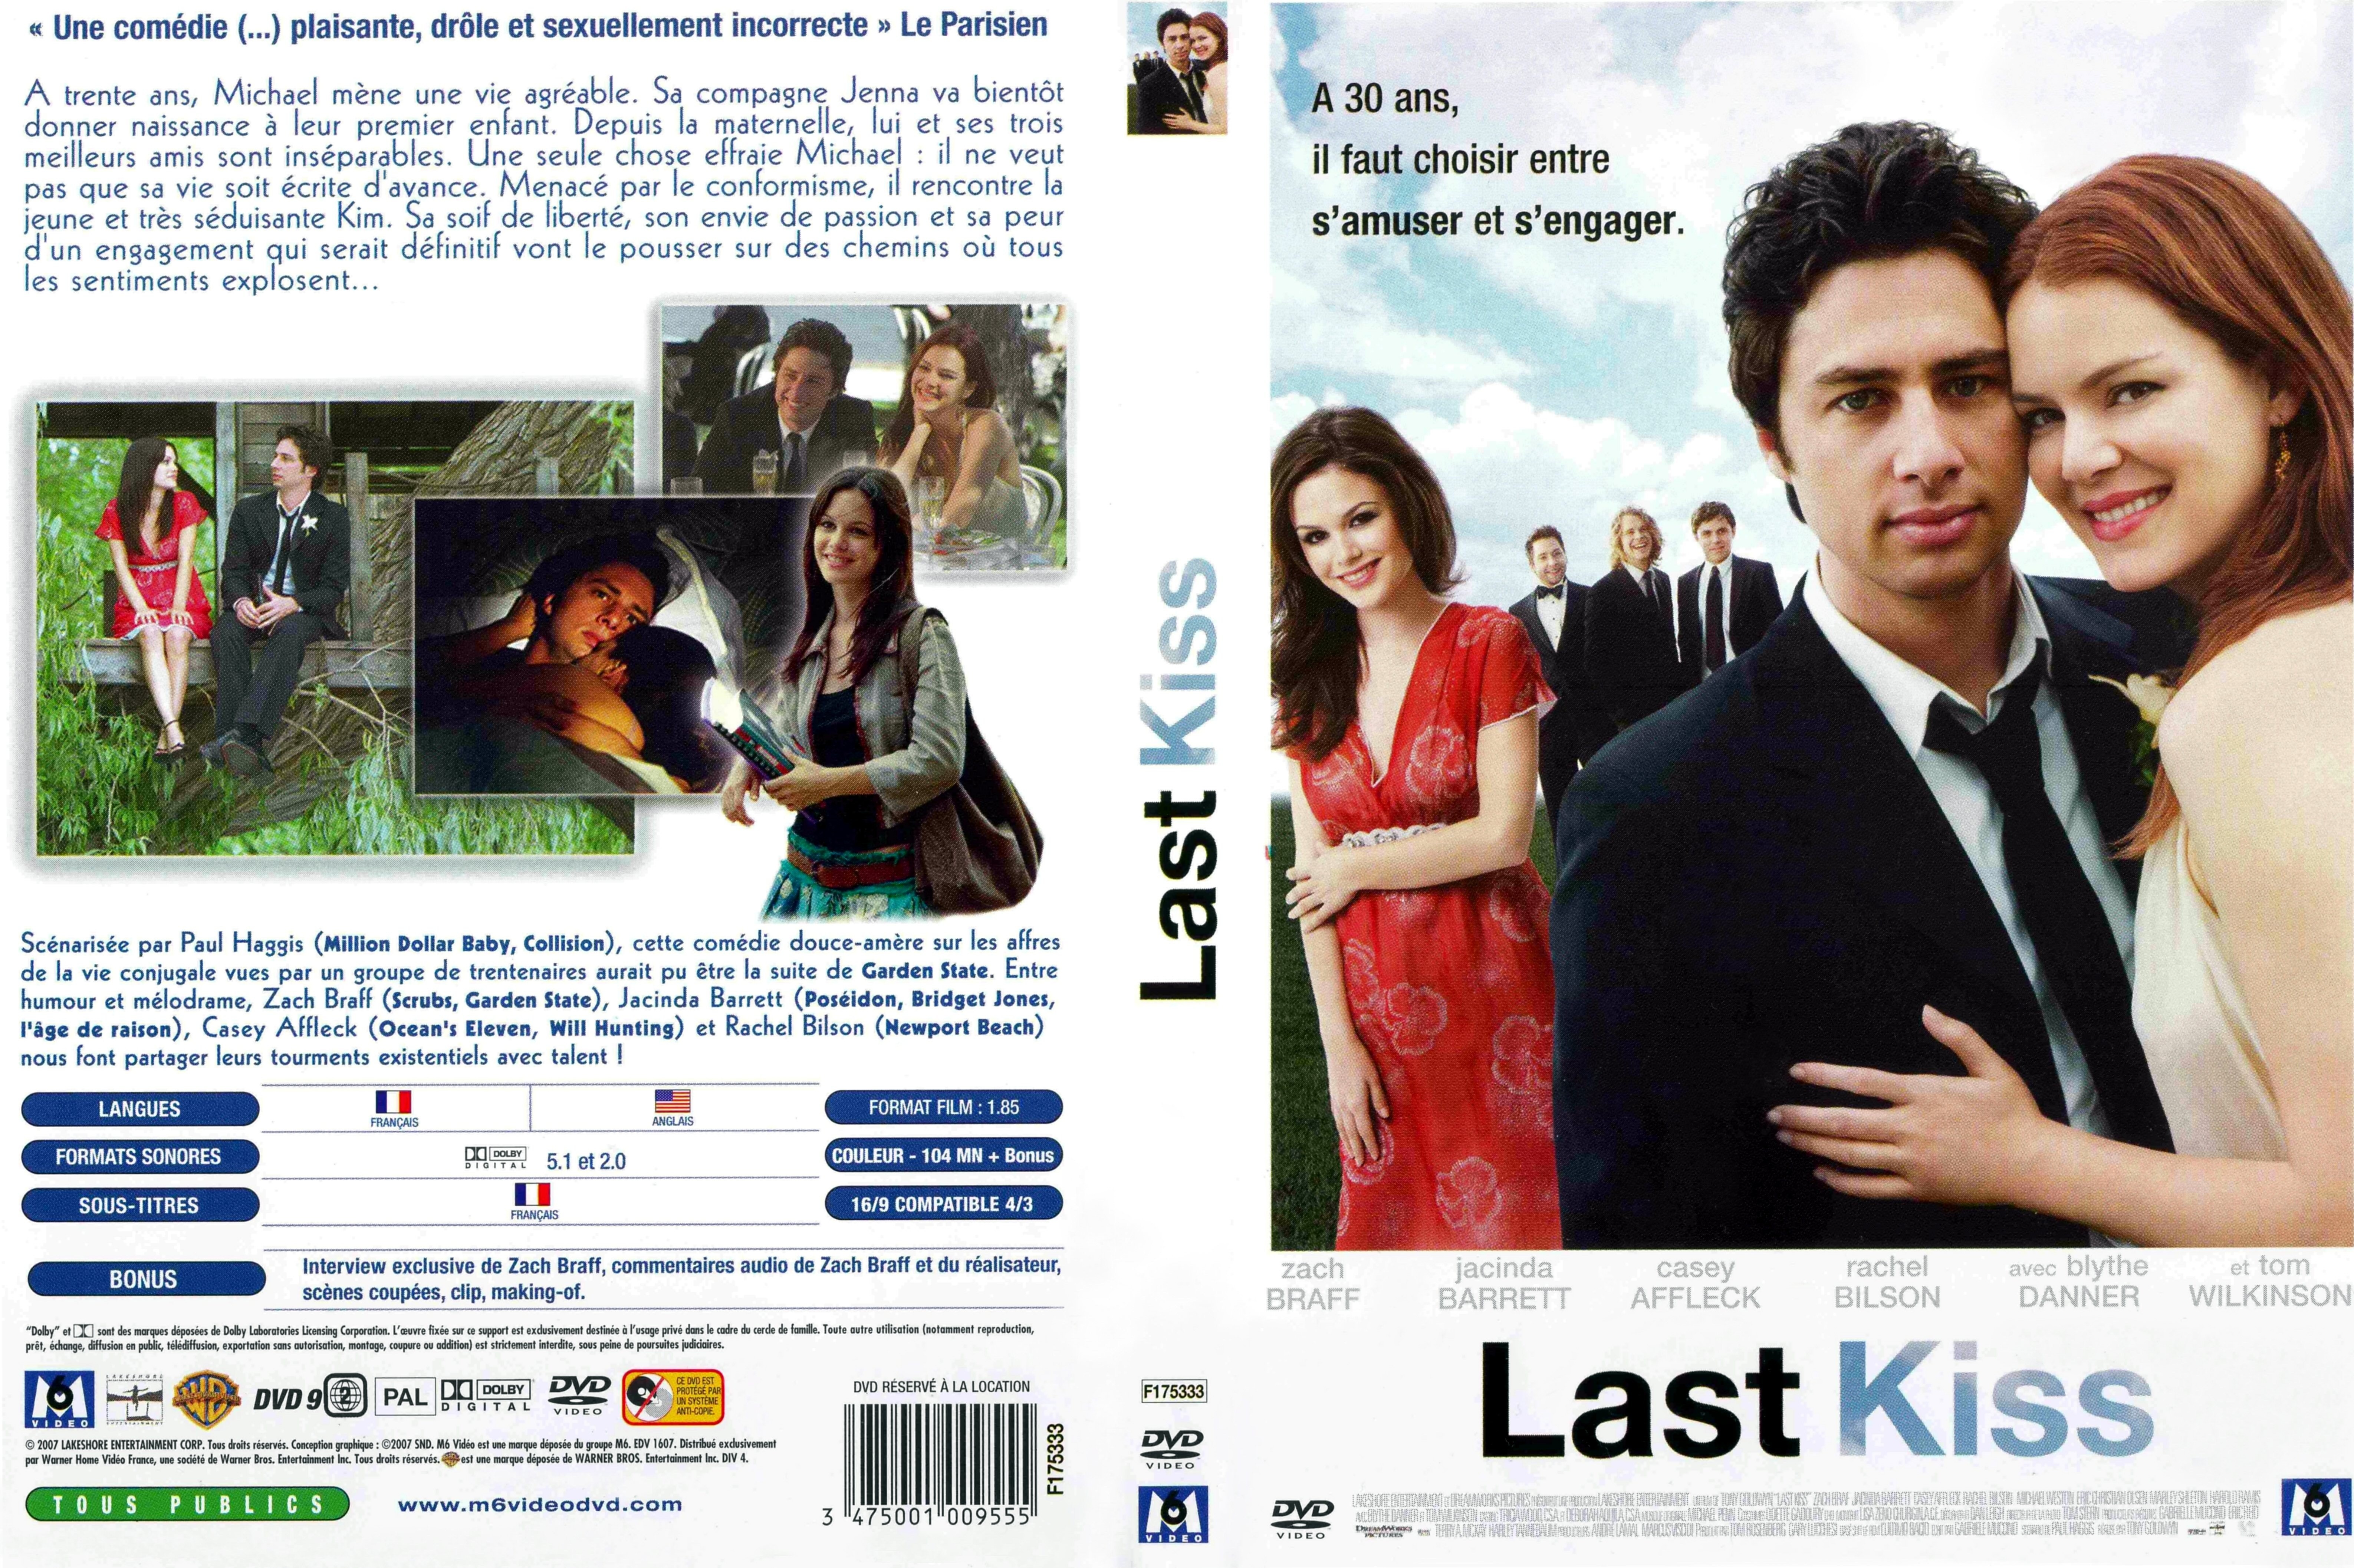 Jaquette DVD Last Kiss